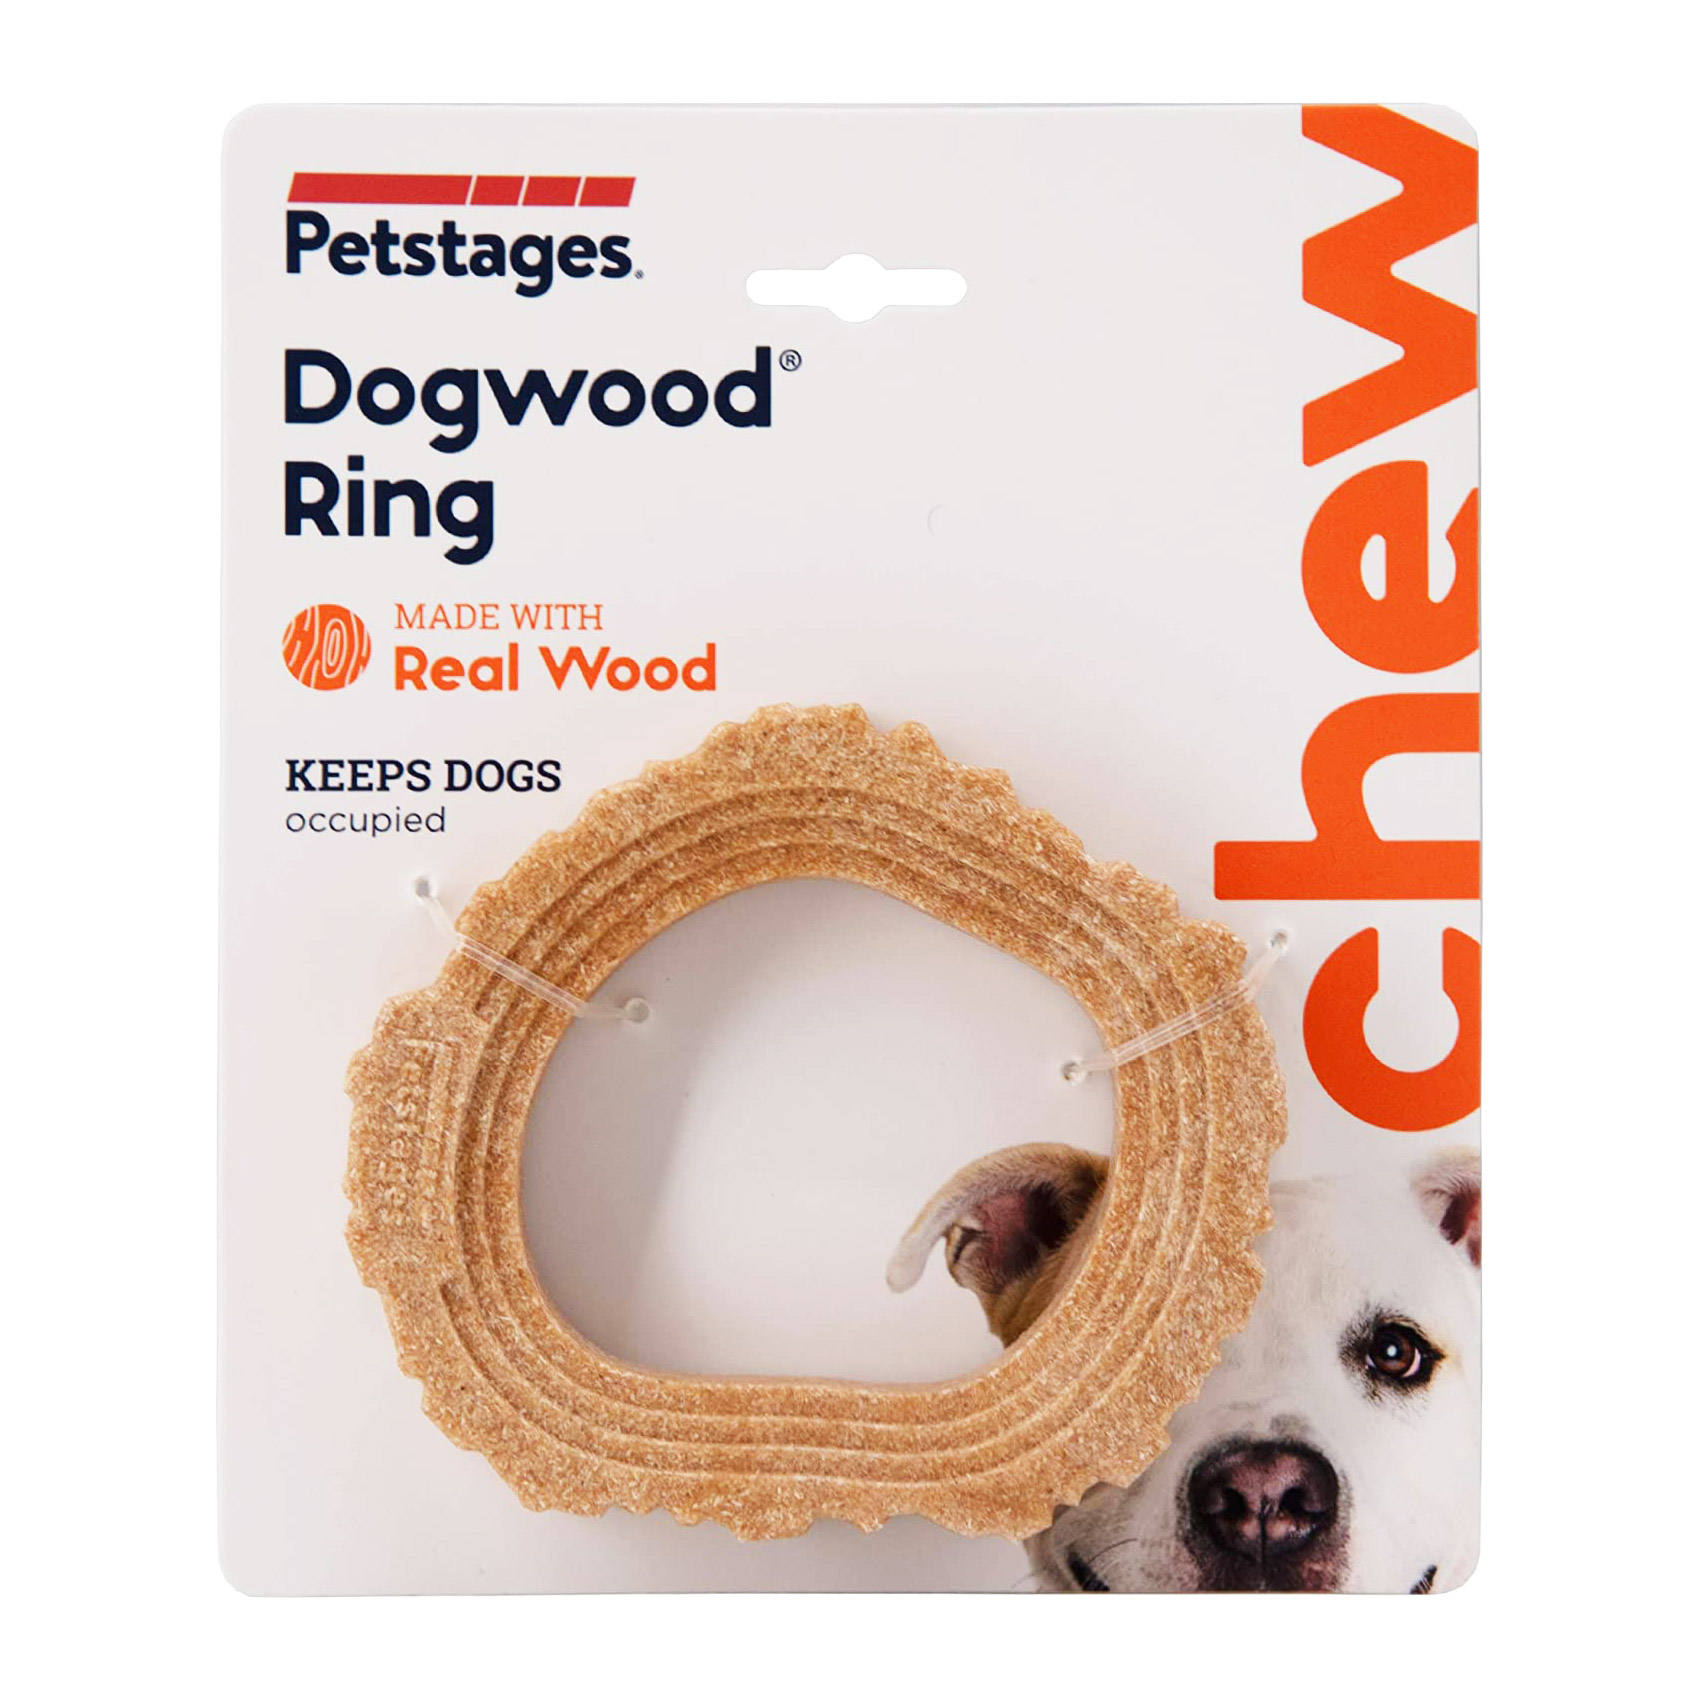 Petstages Dogwood Ring กิ่งไม้ทรงกลม สำหรับสุนัขแทะเล่น ทำจากไม้จริง ช่วยขัดฟัน แทะได้ทุกมุม